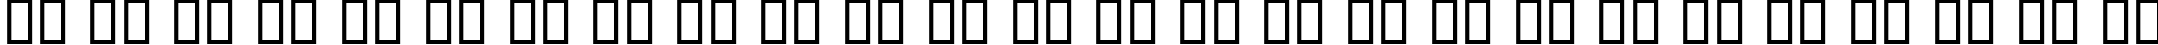 Пример написания английского алфавита шрифтом B Nasim Bold